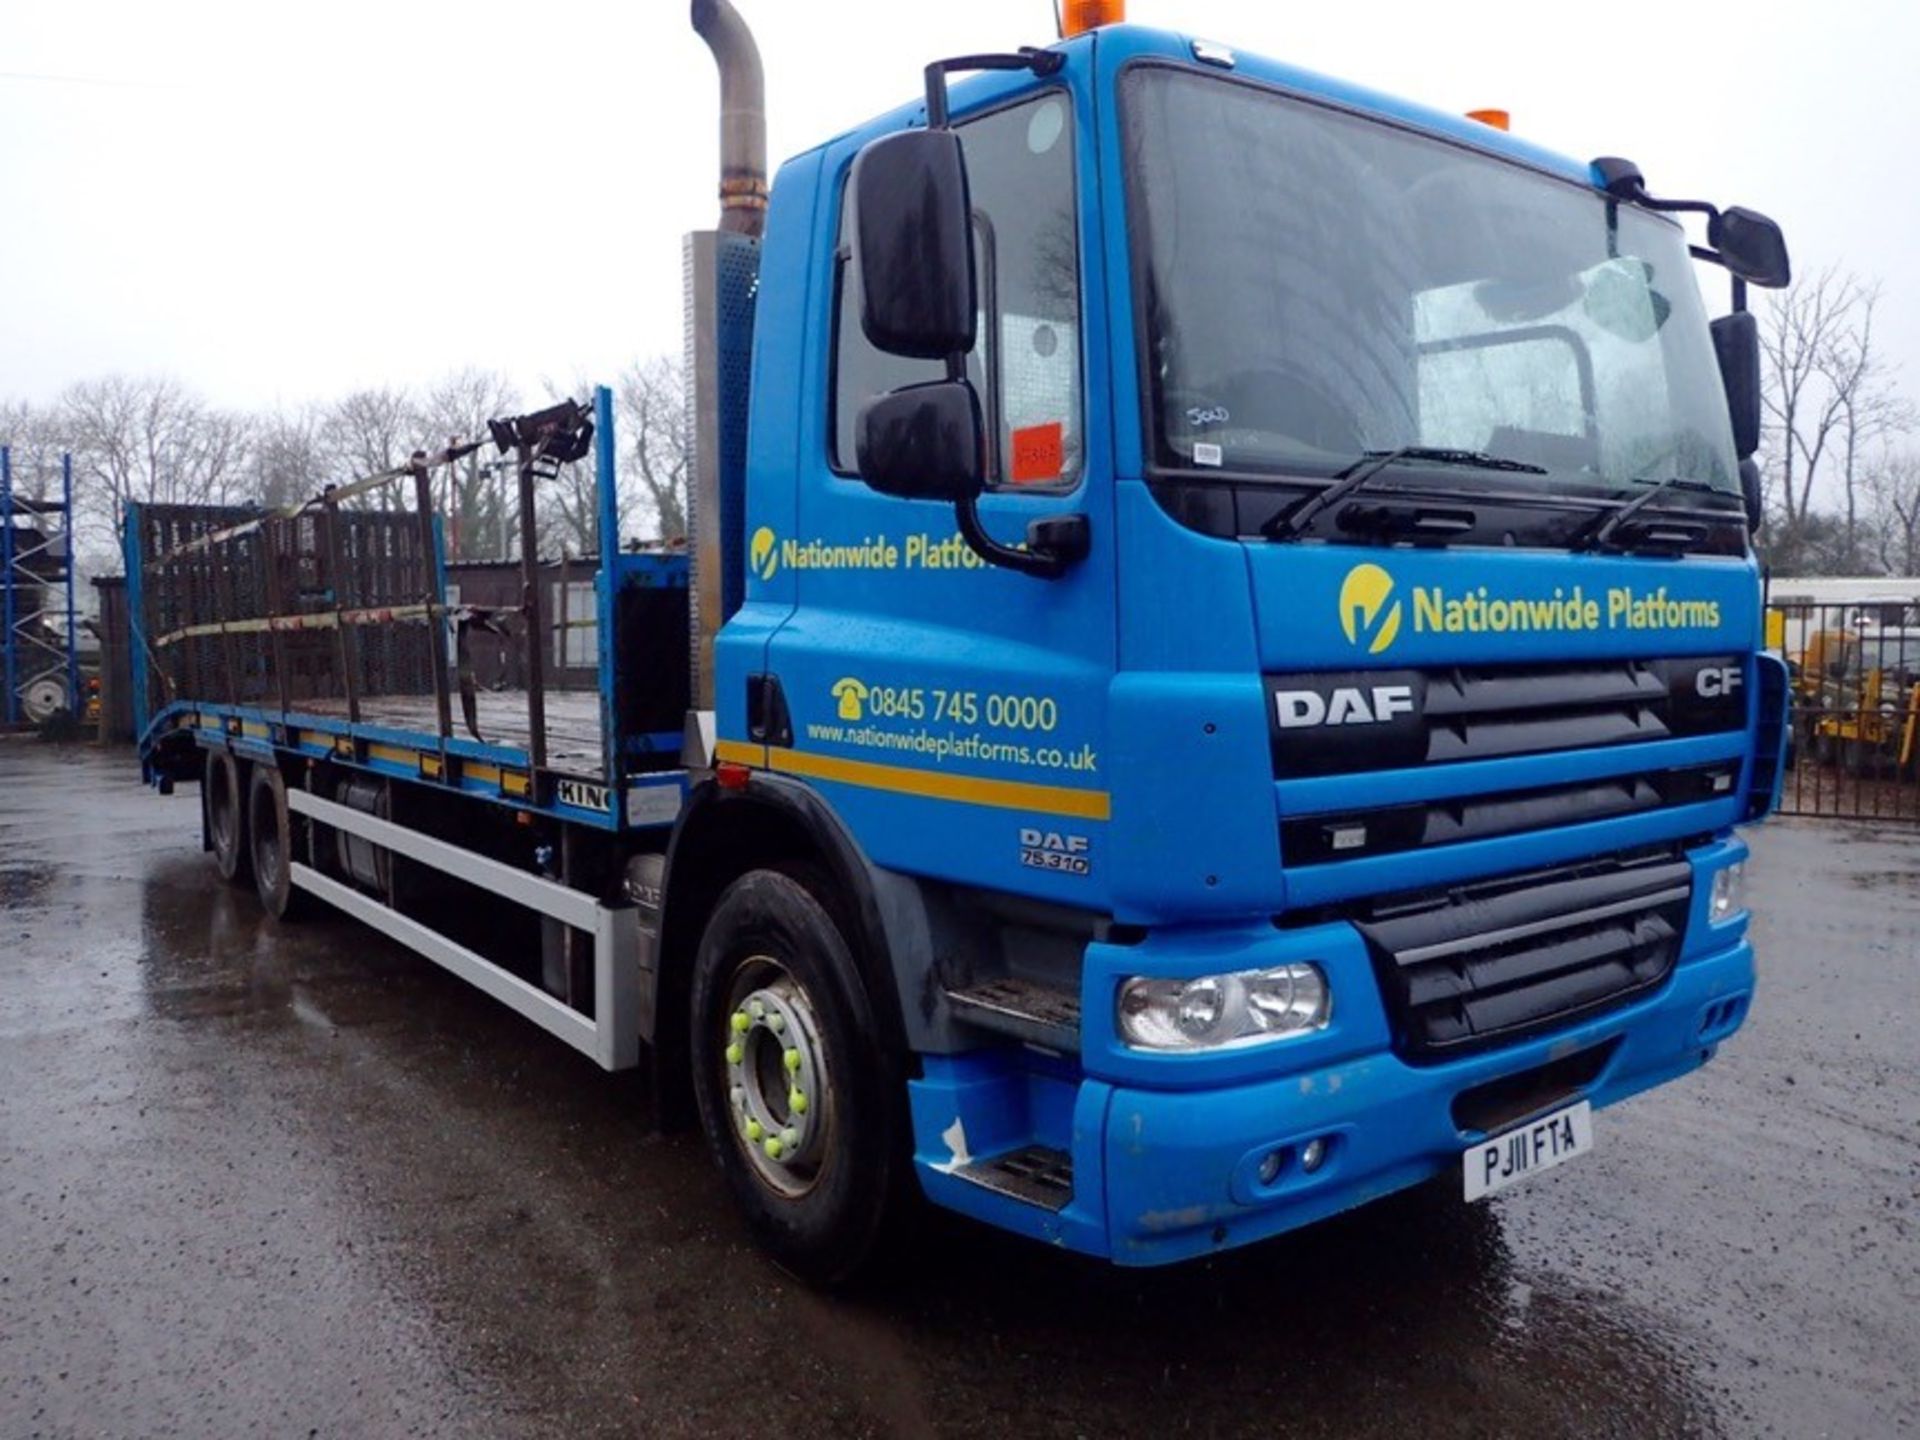 DAF CF 75 310 26 tonne 6x2 beaver tail plant lorry Registration Number: PJ11 FTA Date of